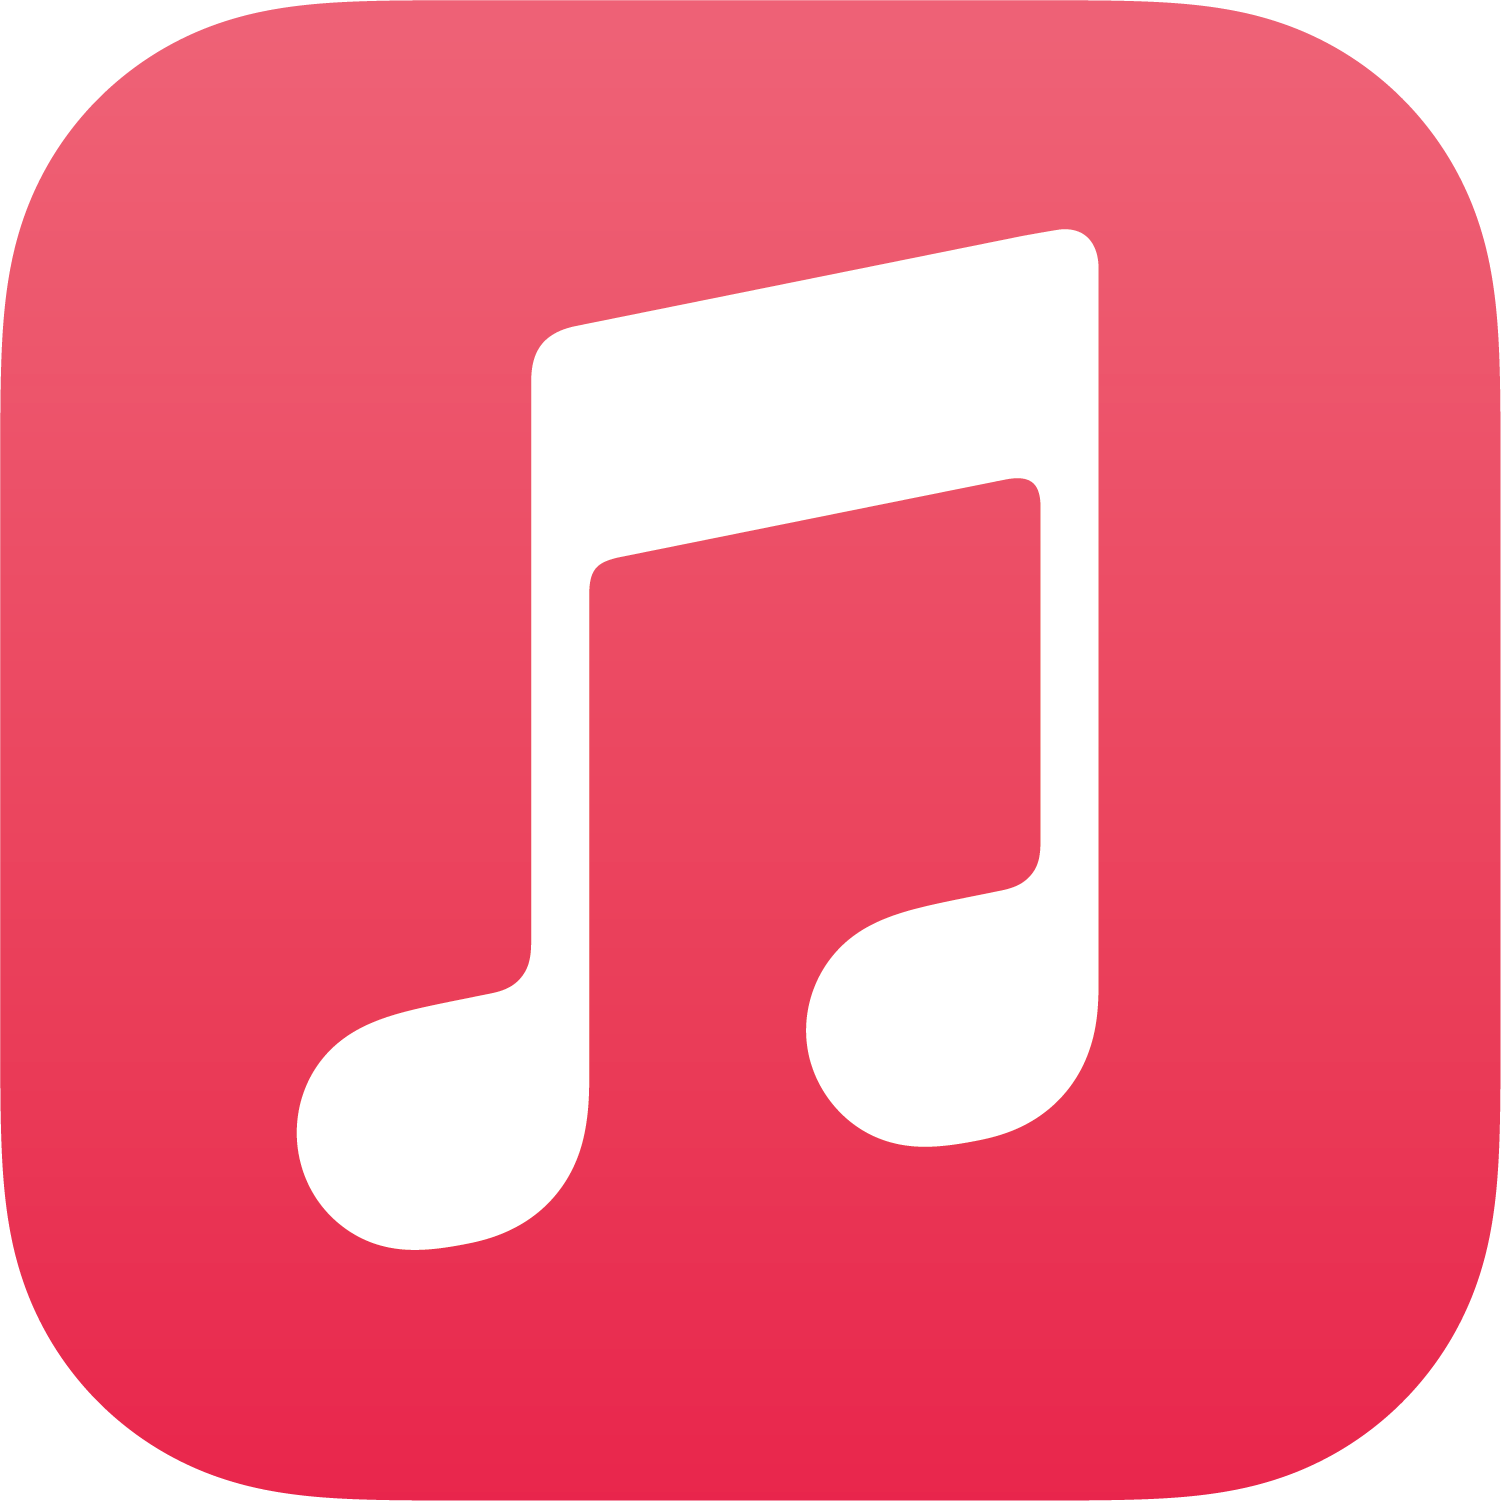 Stream Barritz™ on Apple Music